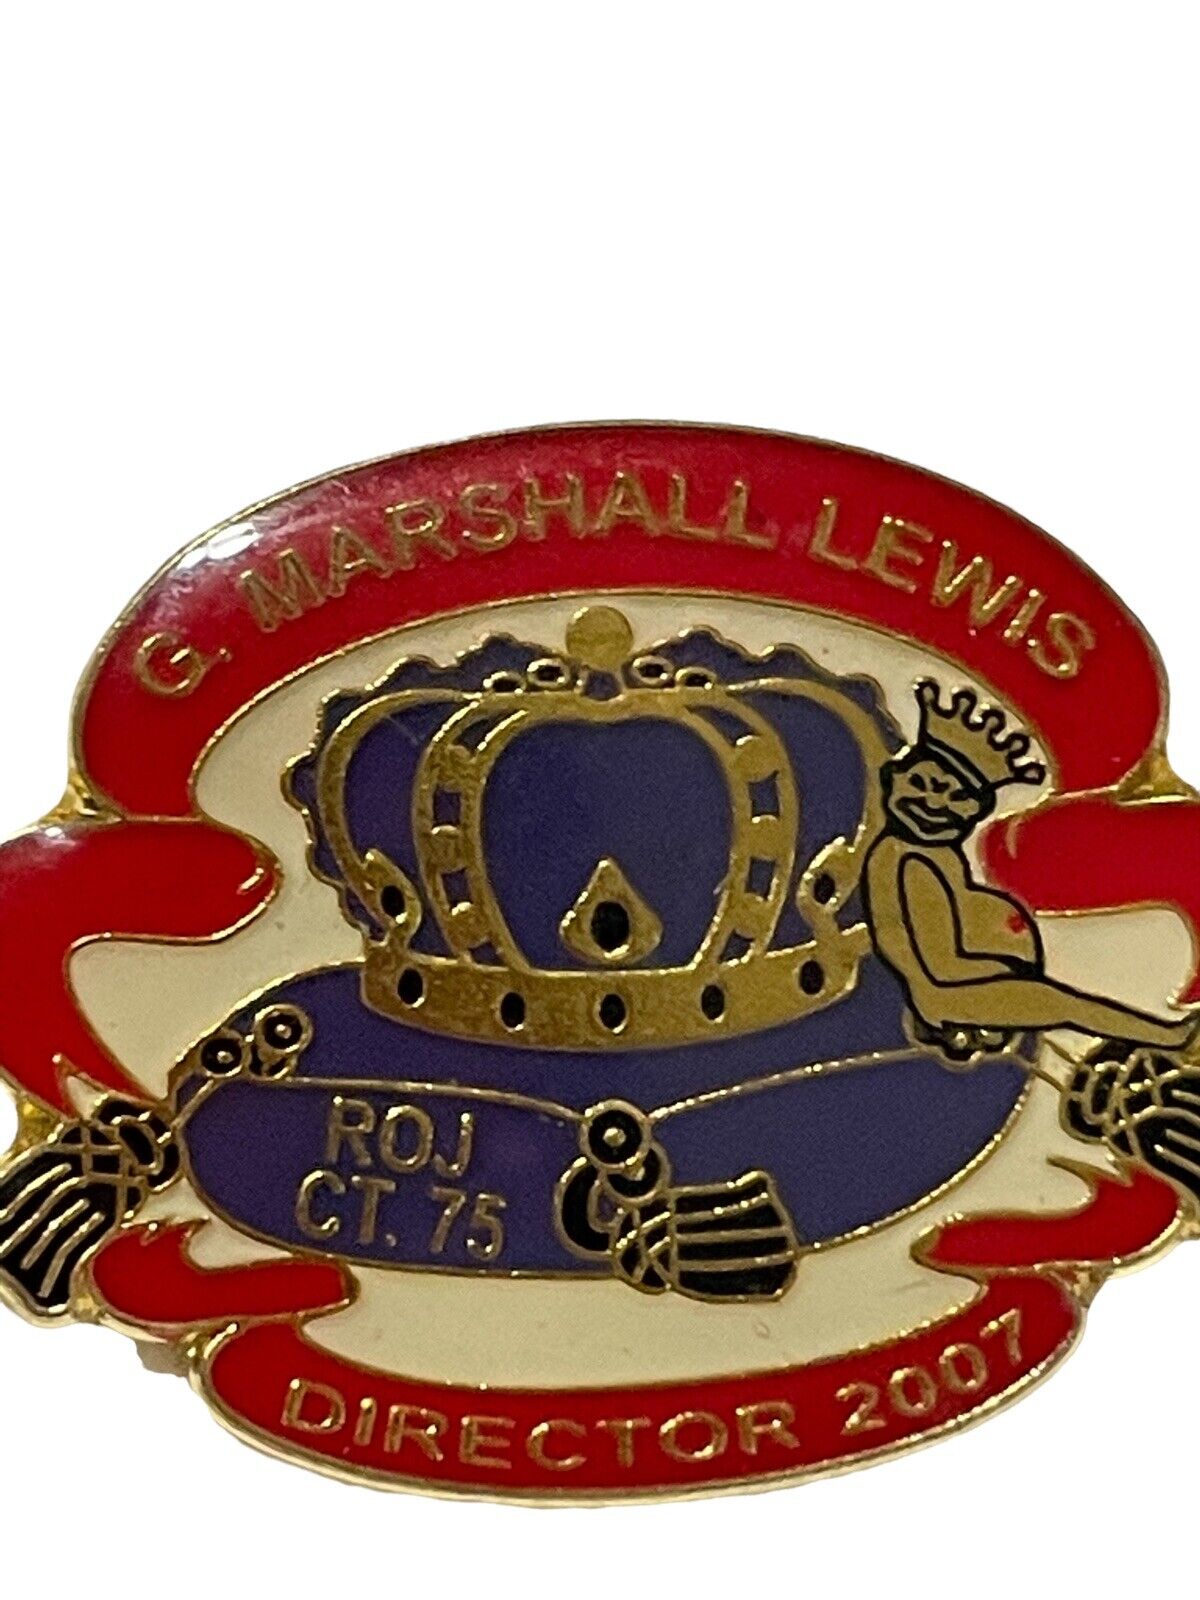 G. Lewis Marshall Lewis ROJ Ct.75 Director 2007 Masonic Enamel Red Blue Pin 